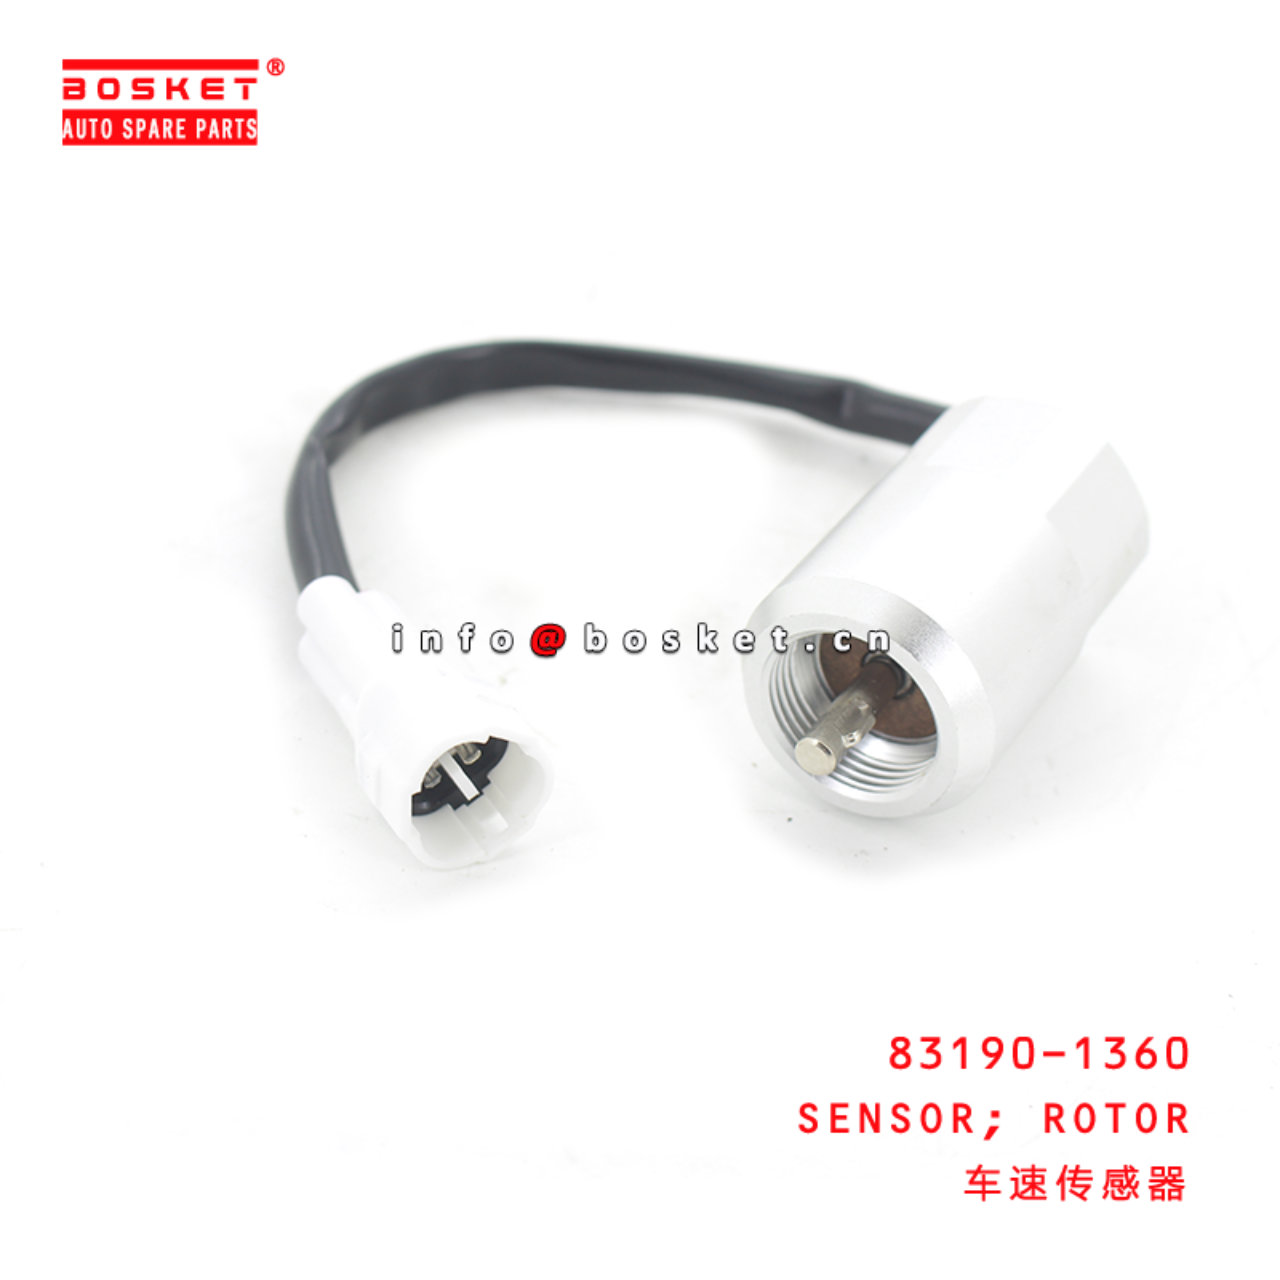 83190-1360 Rotor Sensor Suitable for ISUZU HINO